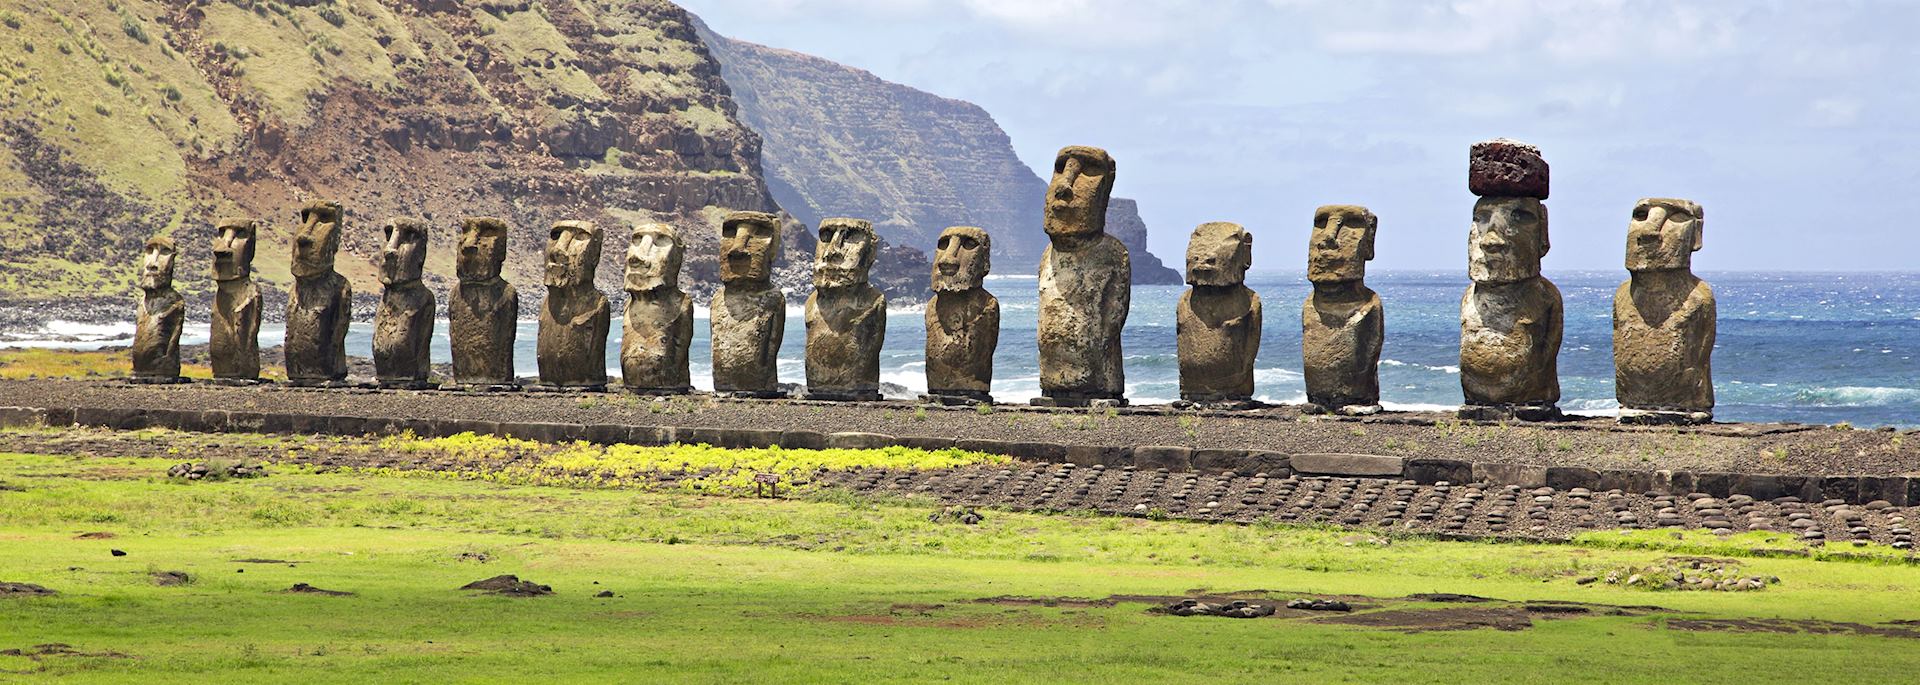 Polynesian Moai statues on Easter Island